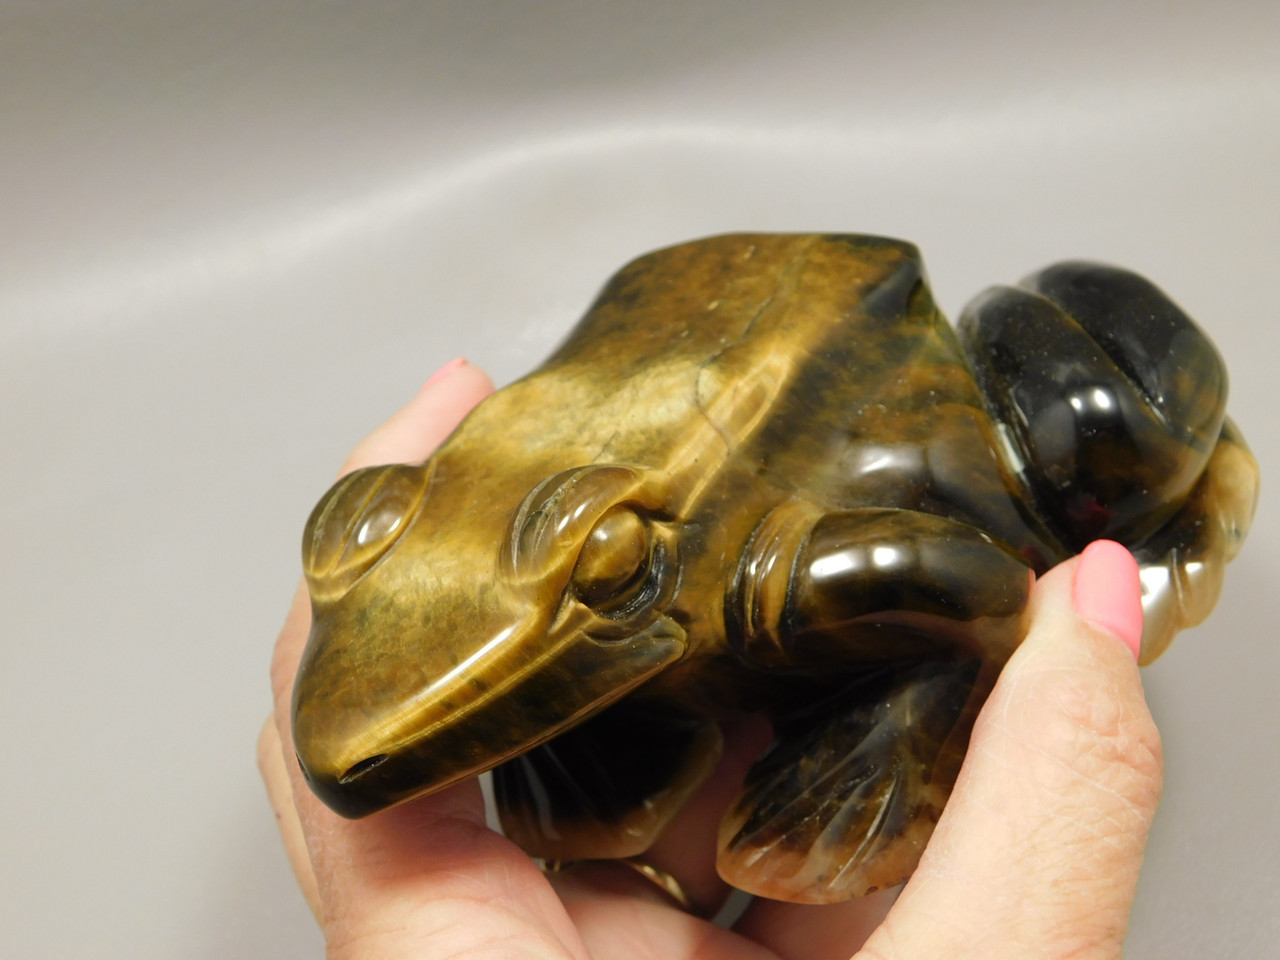 Frog Toad Figurine Tigereye 5 inch Carved Rock Stone Animal #O279